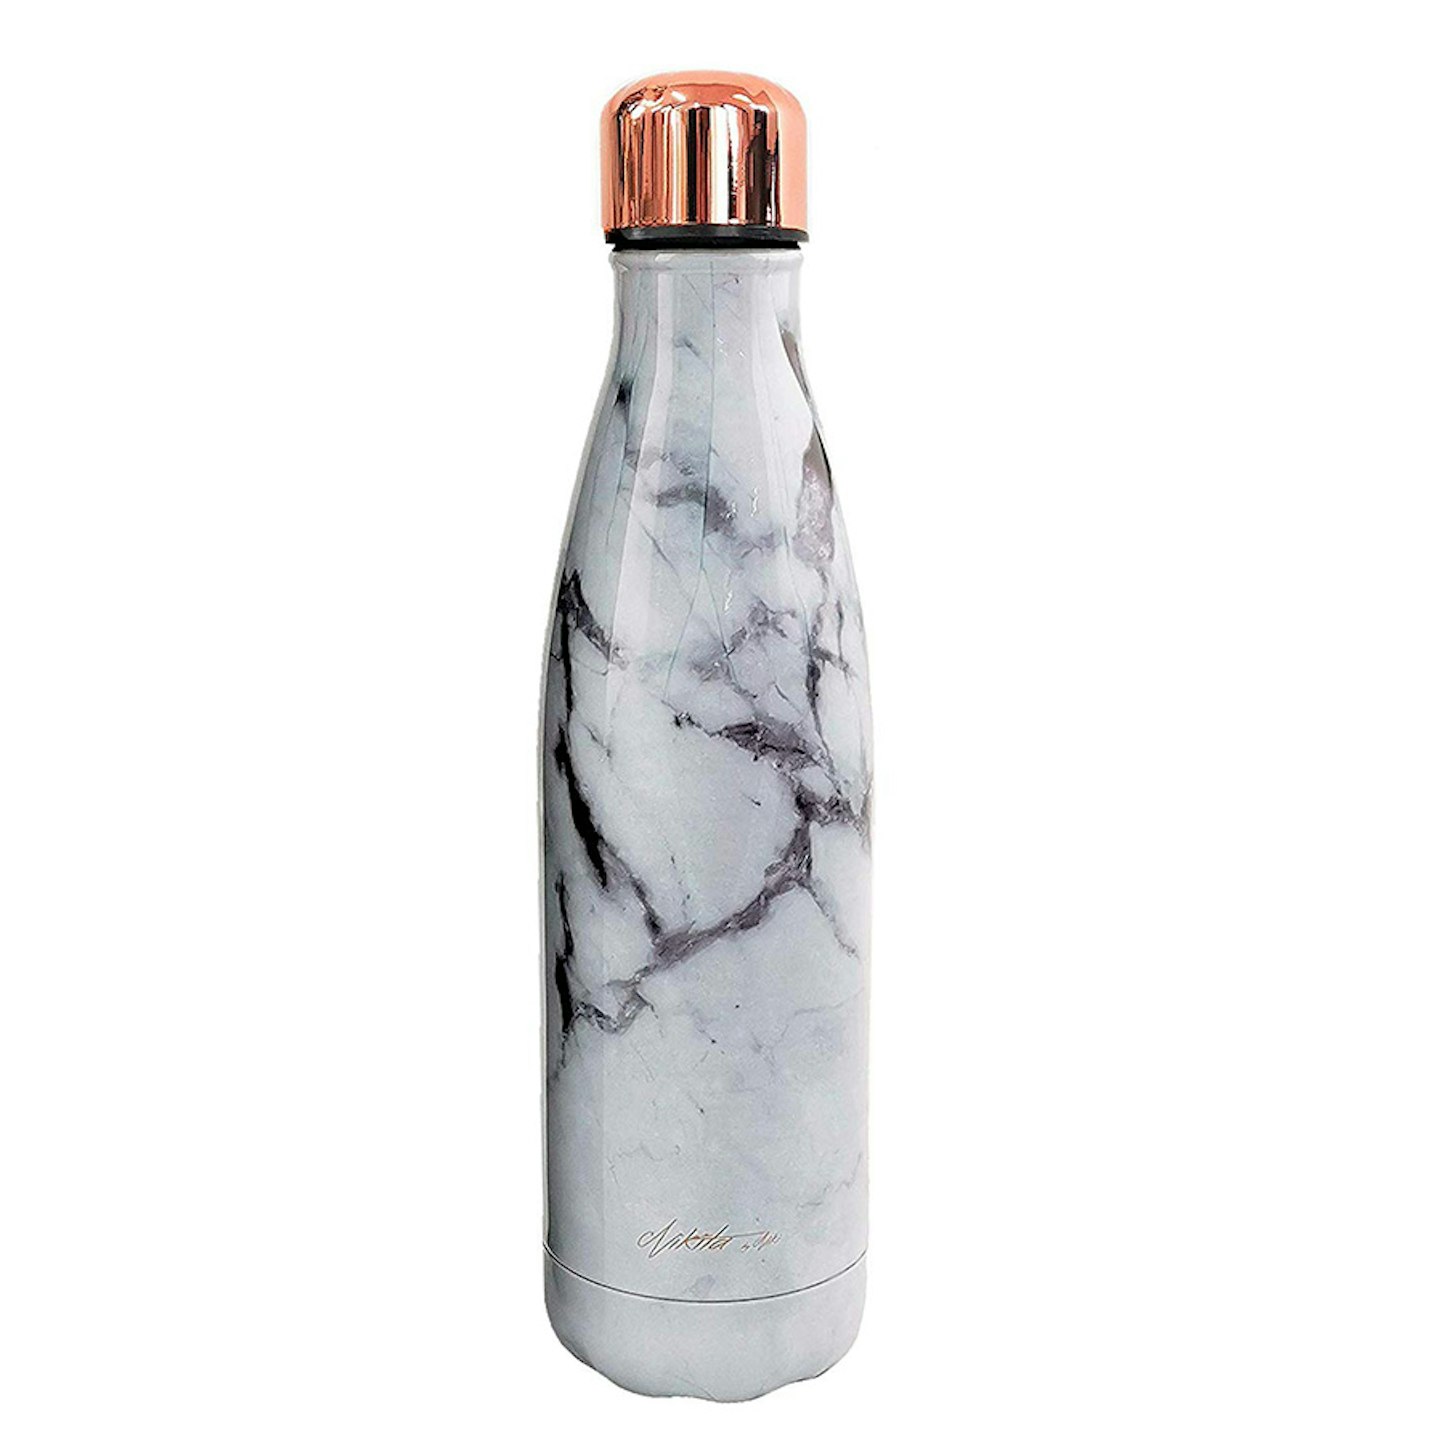 Nikita by Niki Insulated Water Bottle